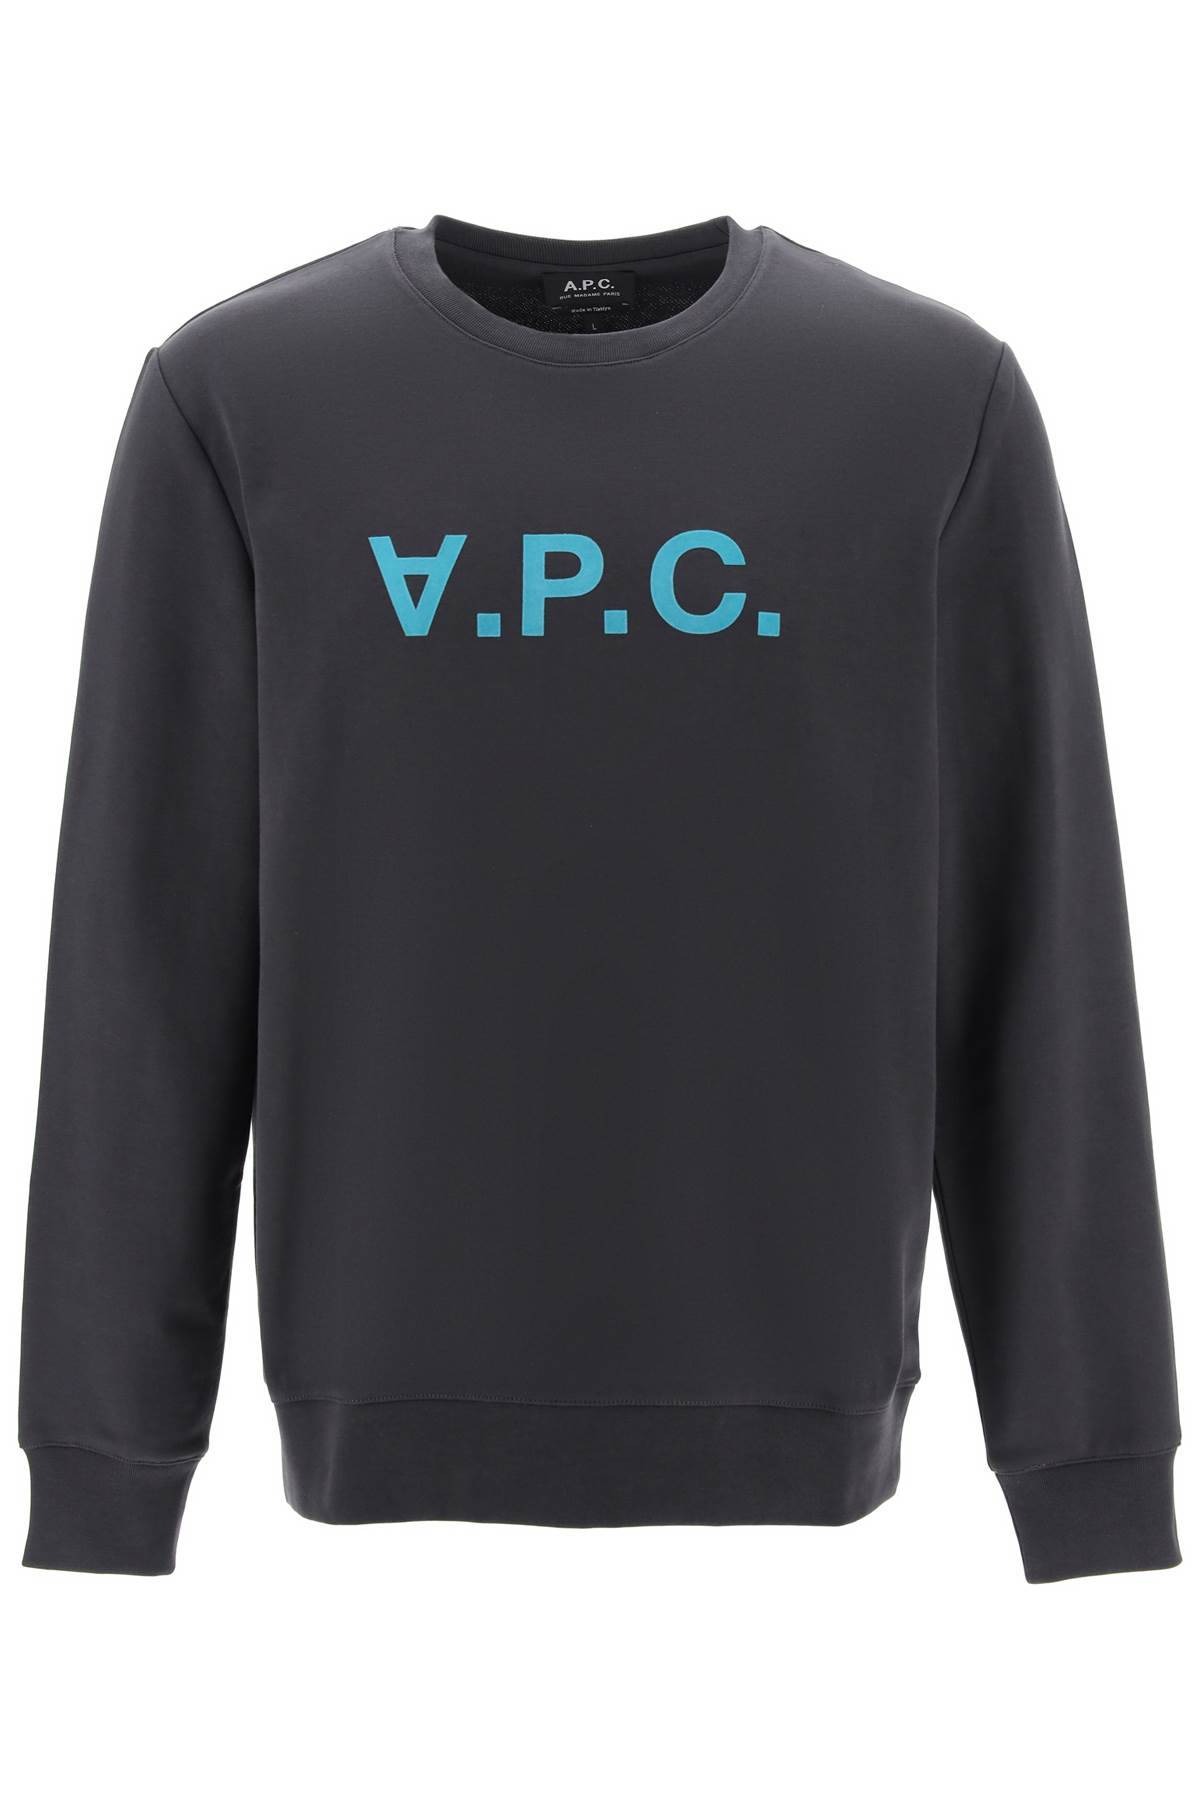 A.P.C. A. P.C. flock v. p.c. logo sweatshirt